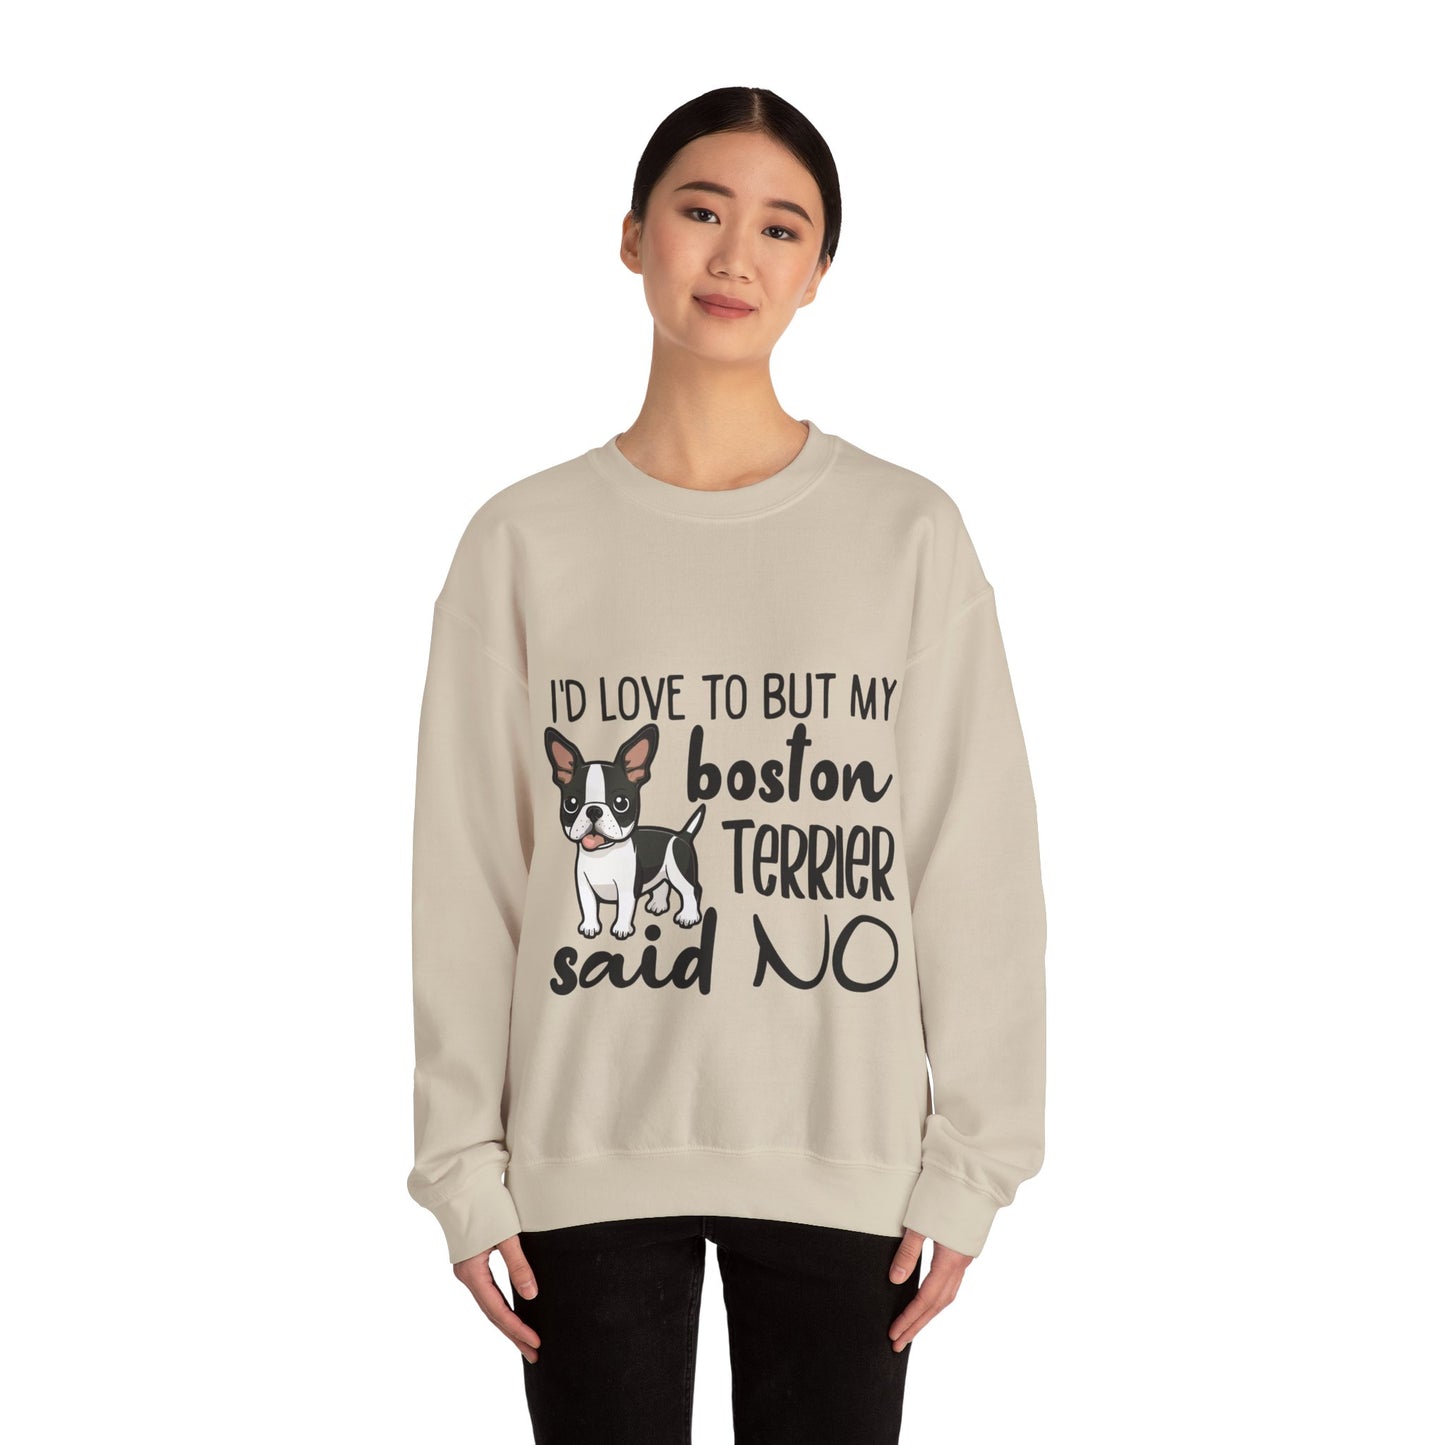 Scooter  - Unisex Sweatshirt for Boston Terrier lovers